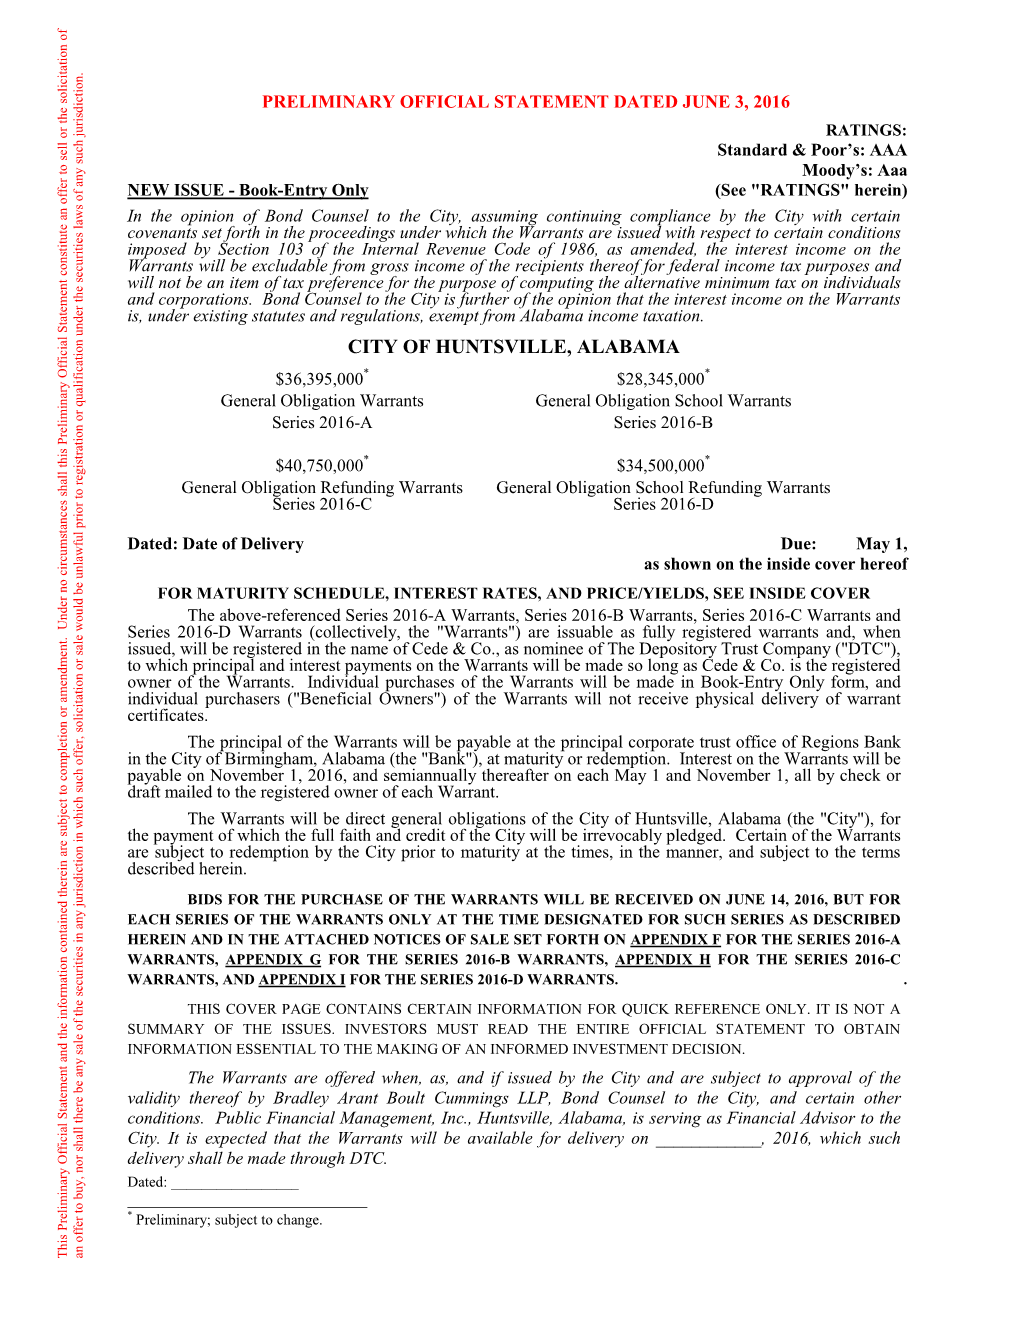 CITY of HUNTSVILLE, ALABAMA $36,395,000* $28,345,000* General Obligation Warrants General Obligation School Warrants Series 2016-A Series 2016-B